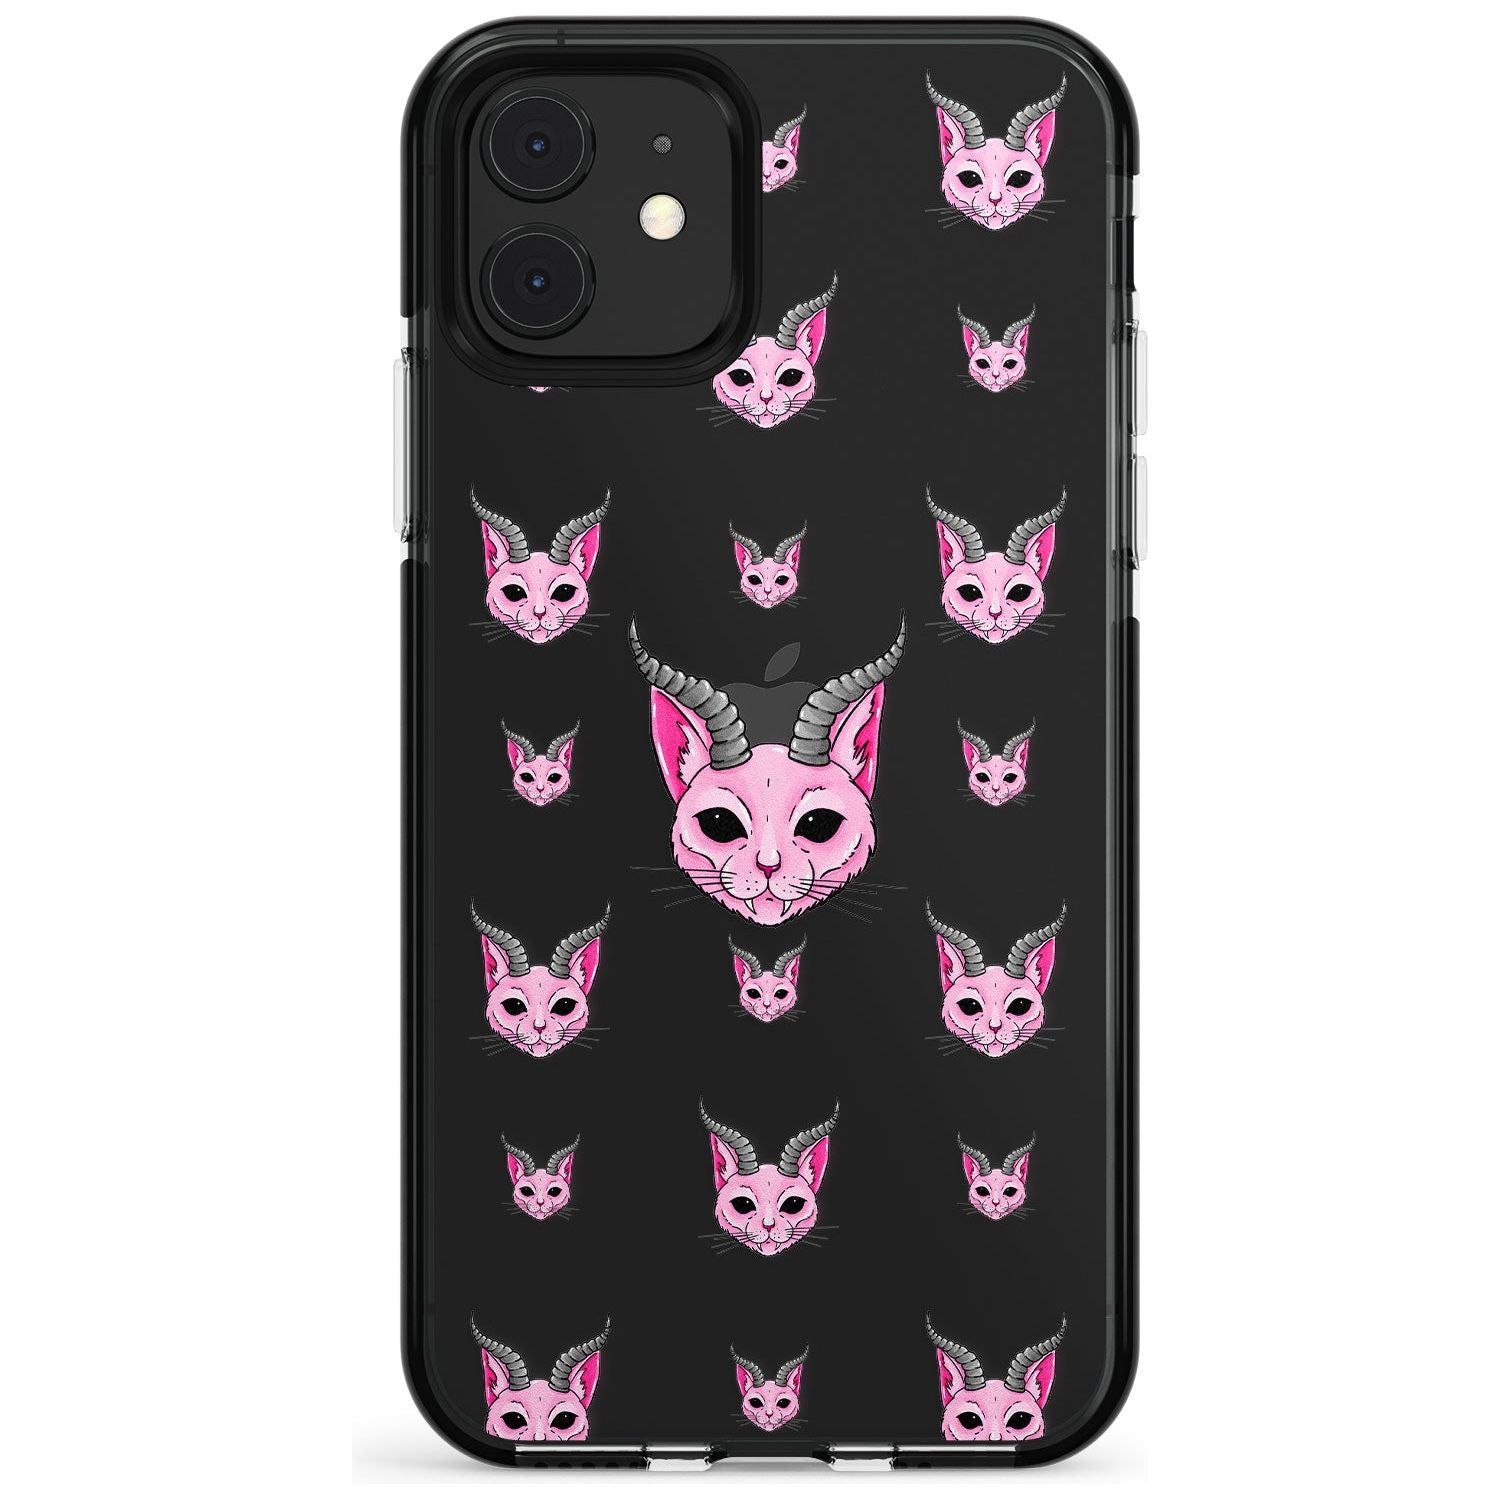 Demon Cat Pattern Black Impact Phone Case for iPhone 11 Pro Max